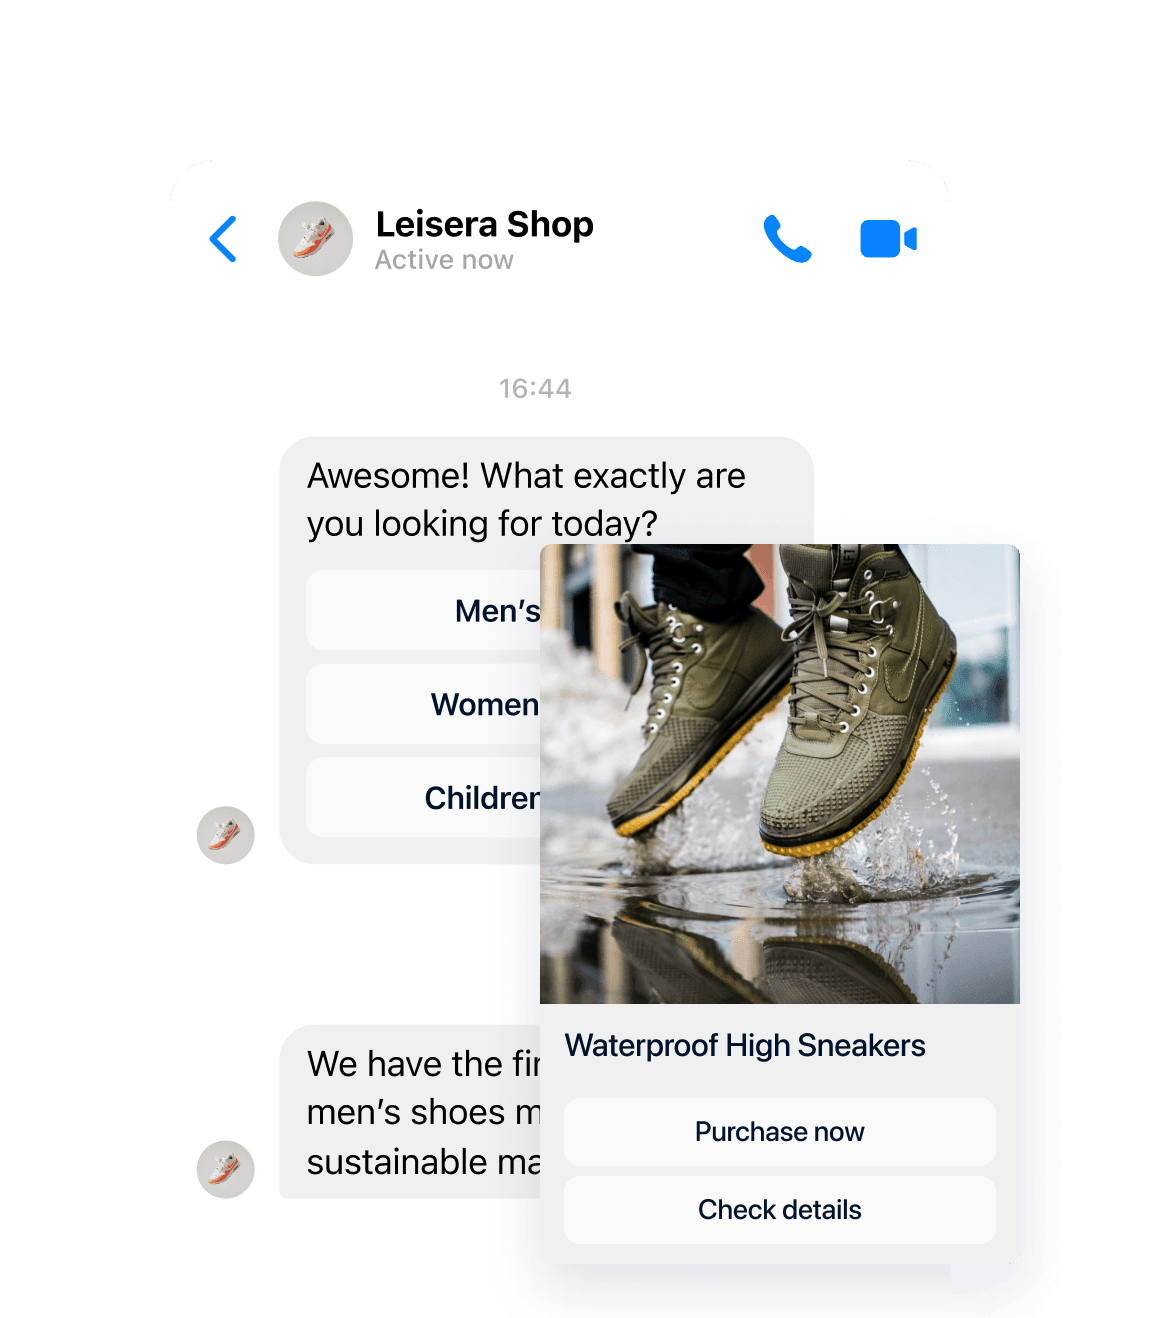 Messenger conversation using bots